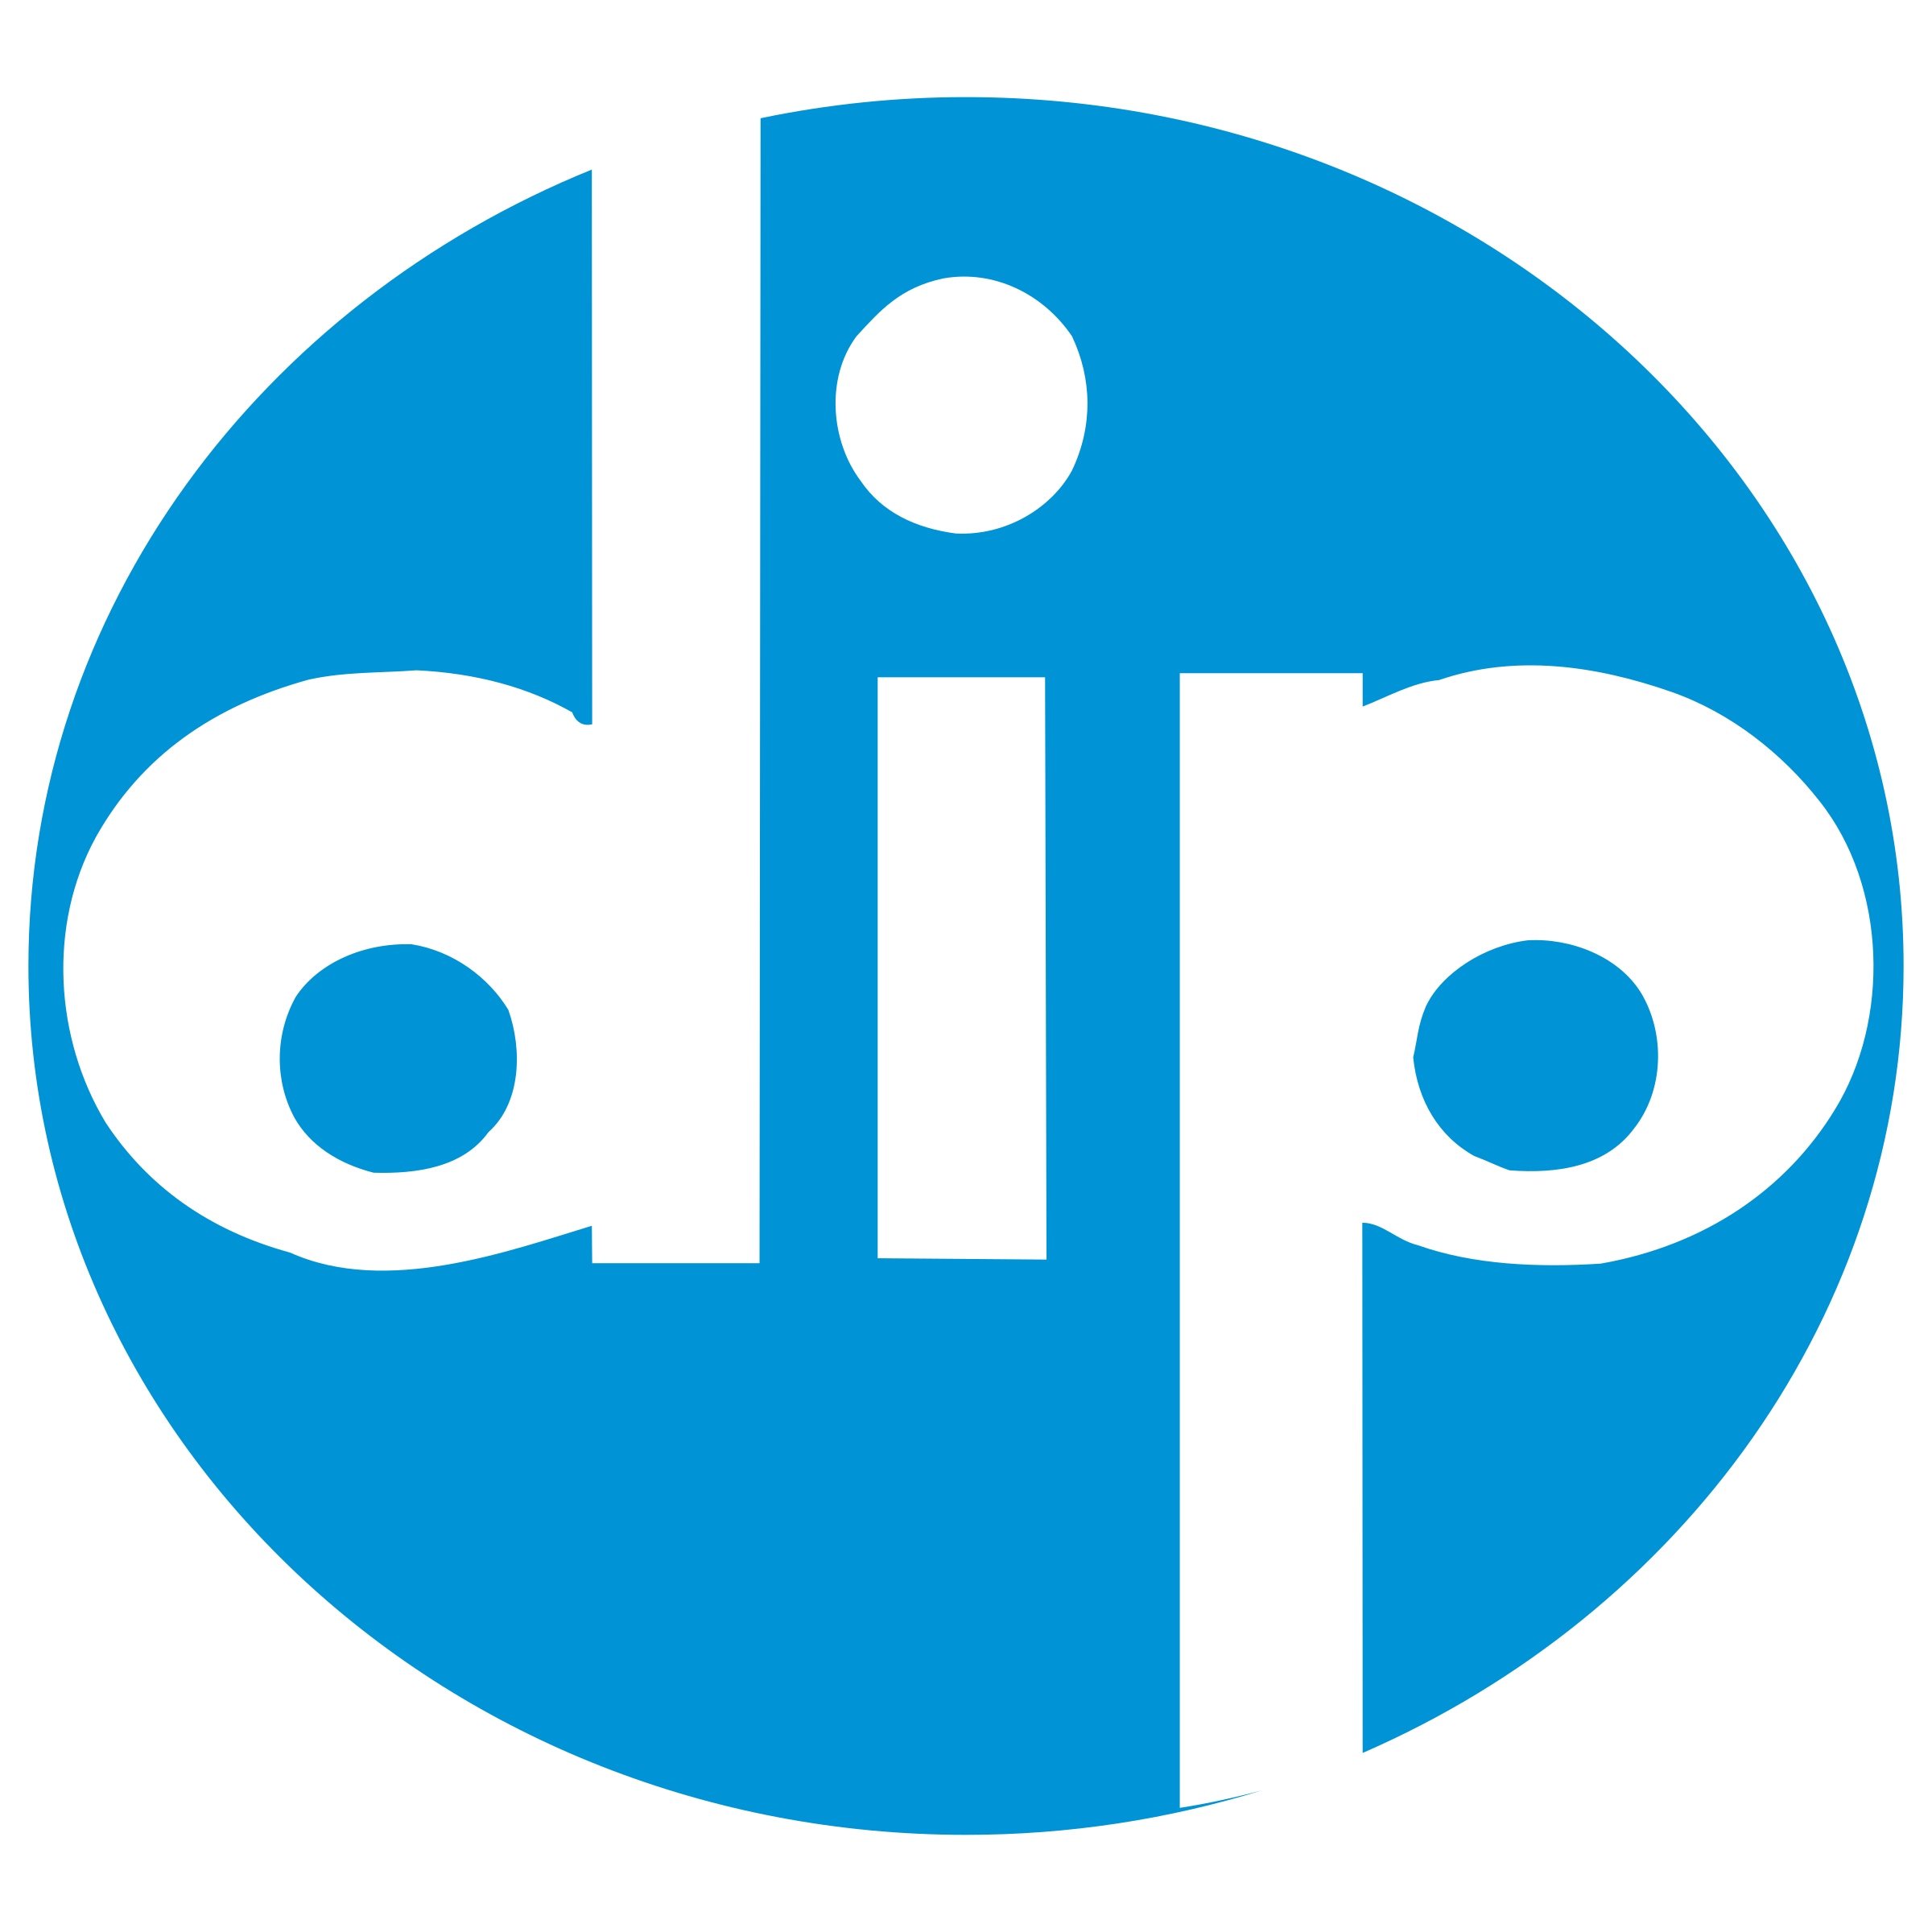 Dip Logo - Dip Logo PNG Transparent & SVG Vector - Freebie Supply